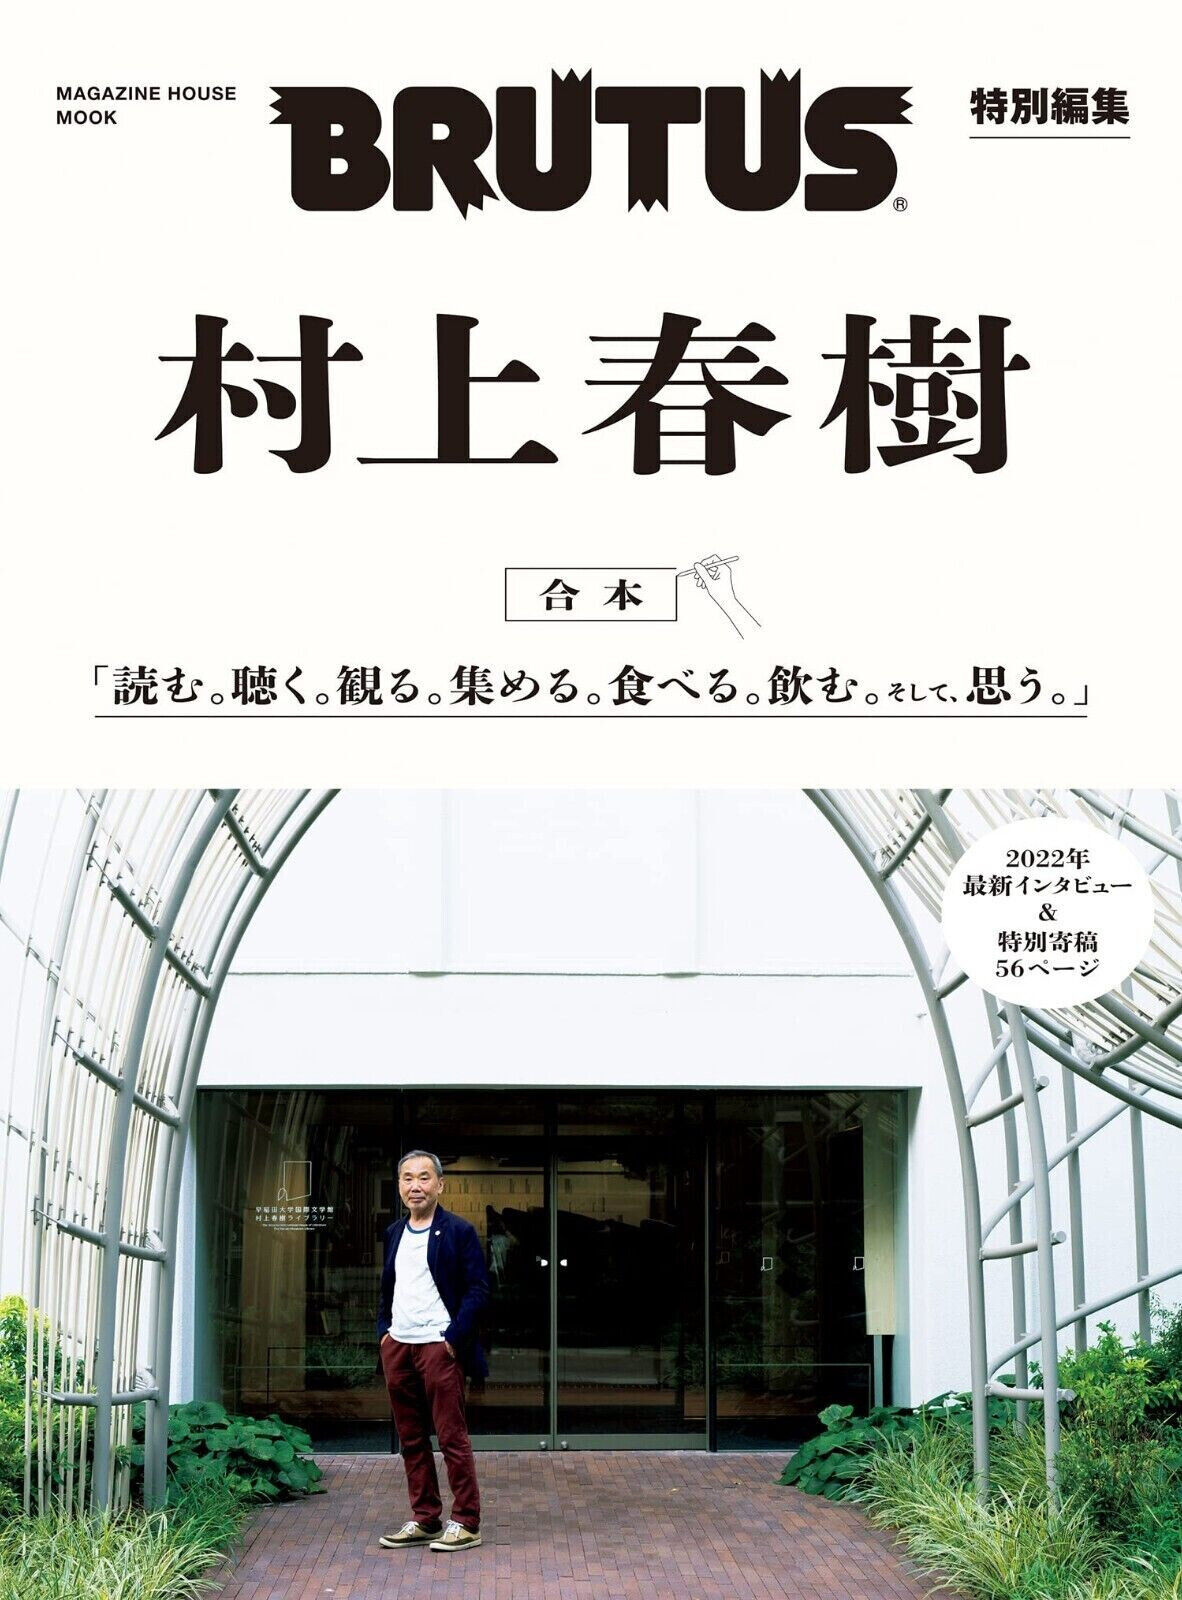 Haruki Murakami Special Edition BRUTUS Japanese Culture Magazine